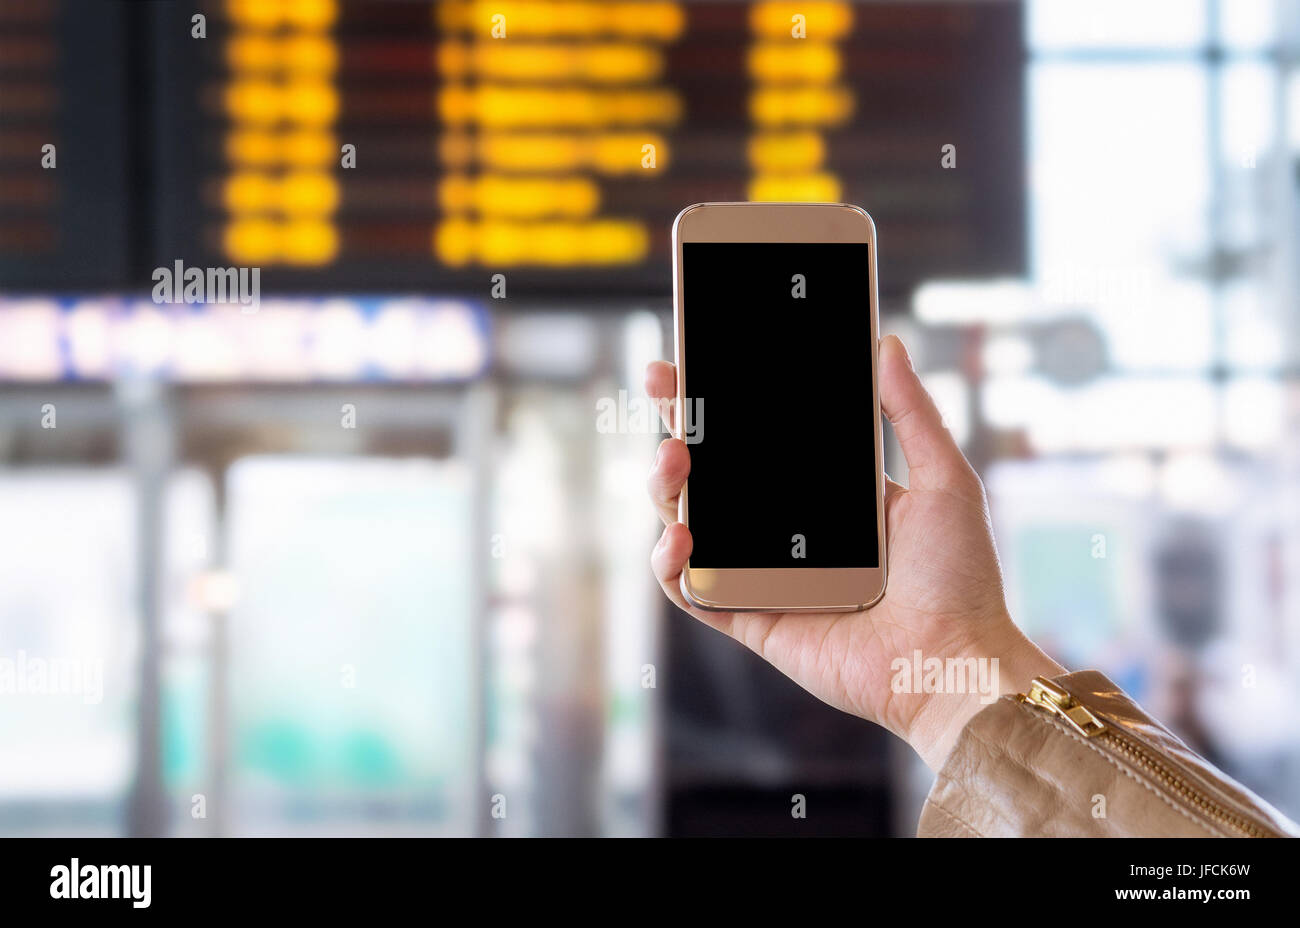 Smartphone mit leeren Bildschirm in Bus, Bahn, u-Bahn, u-Bahn oder u-Bahn Bahnhof oder Flughafen. Allgemeine öffentliche Verkehrsmittel terminal. Stockfoto